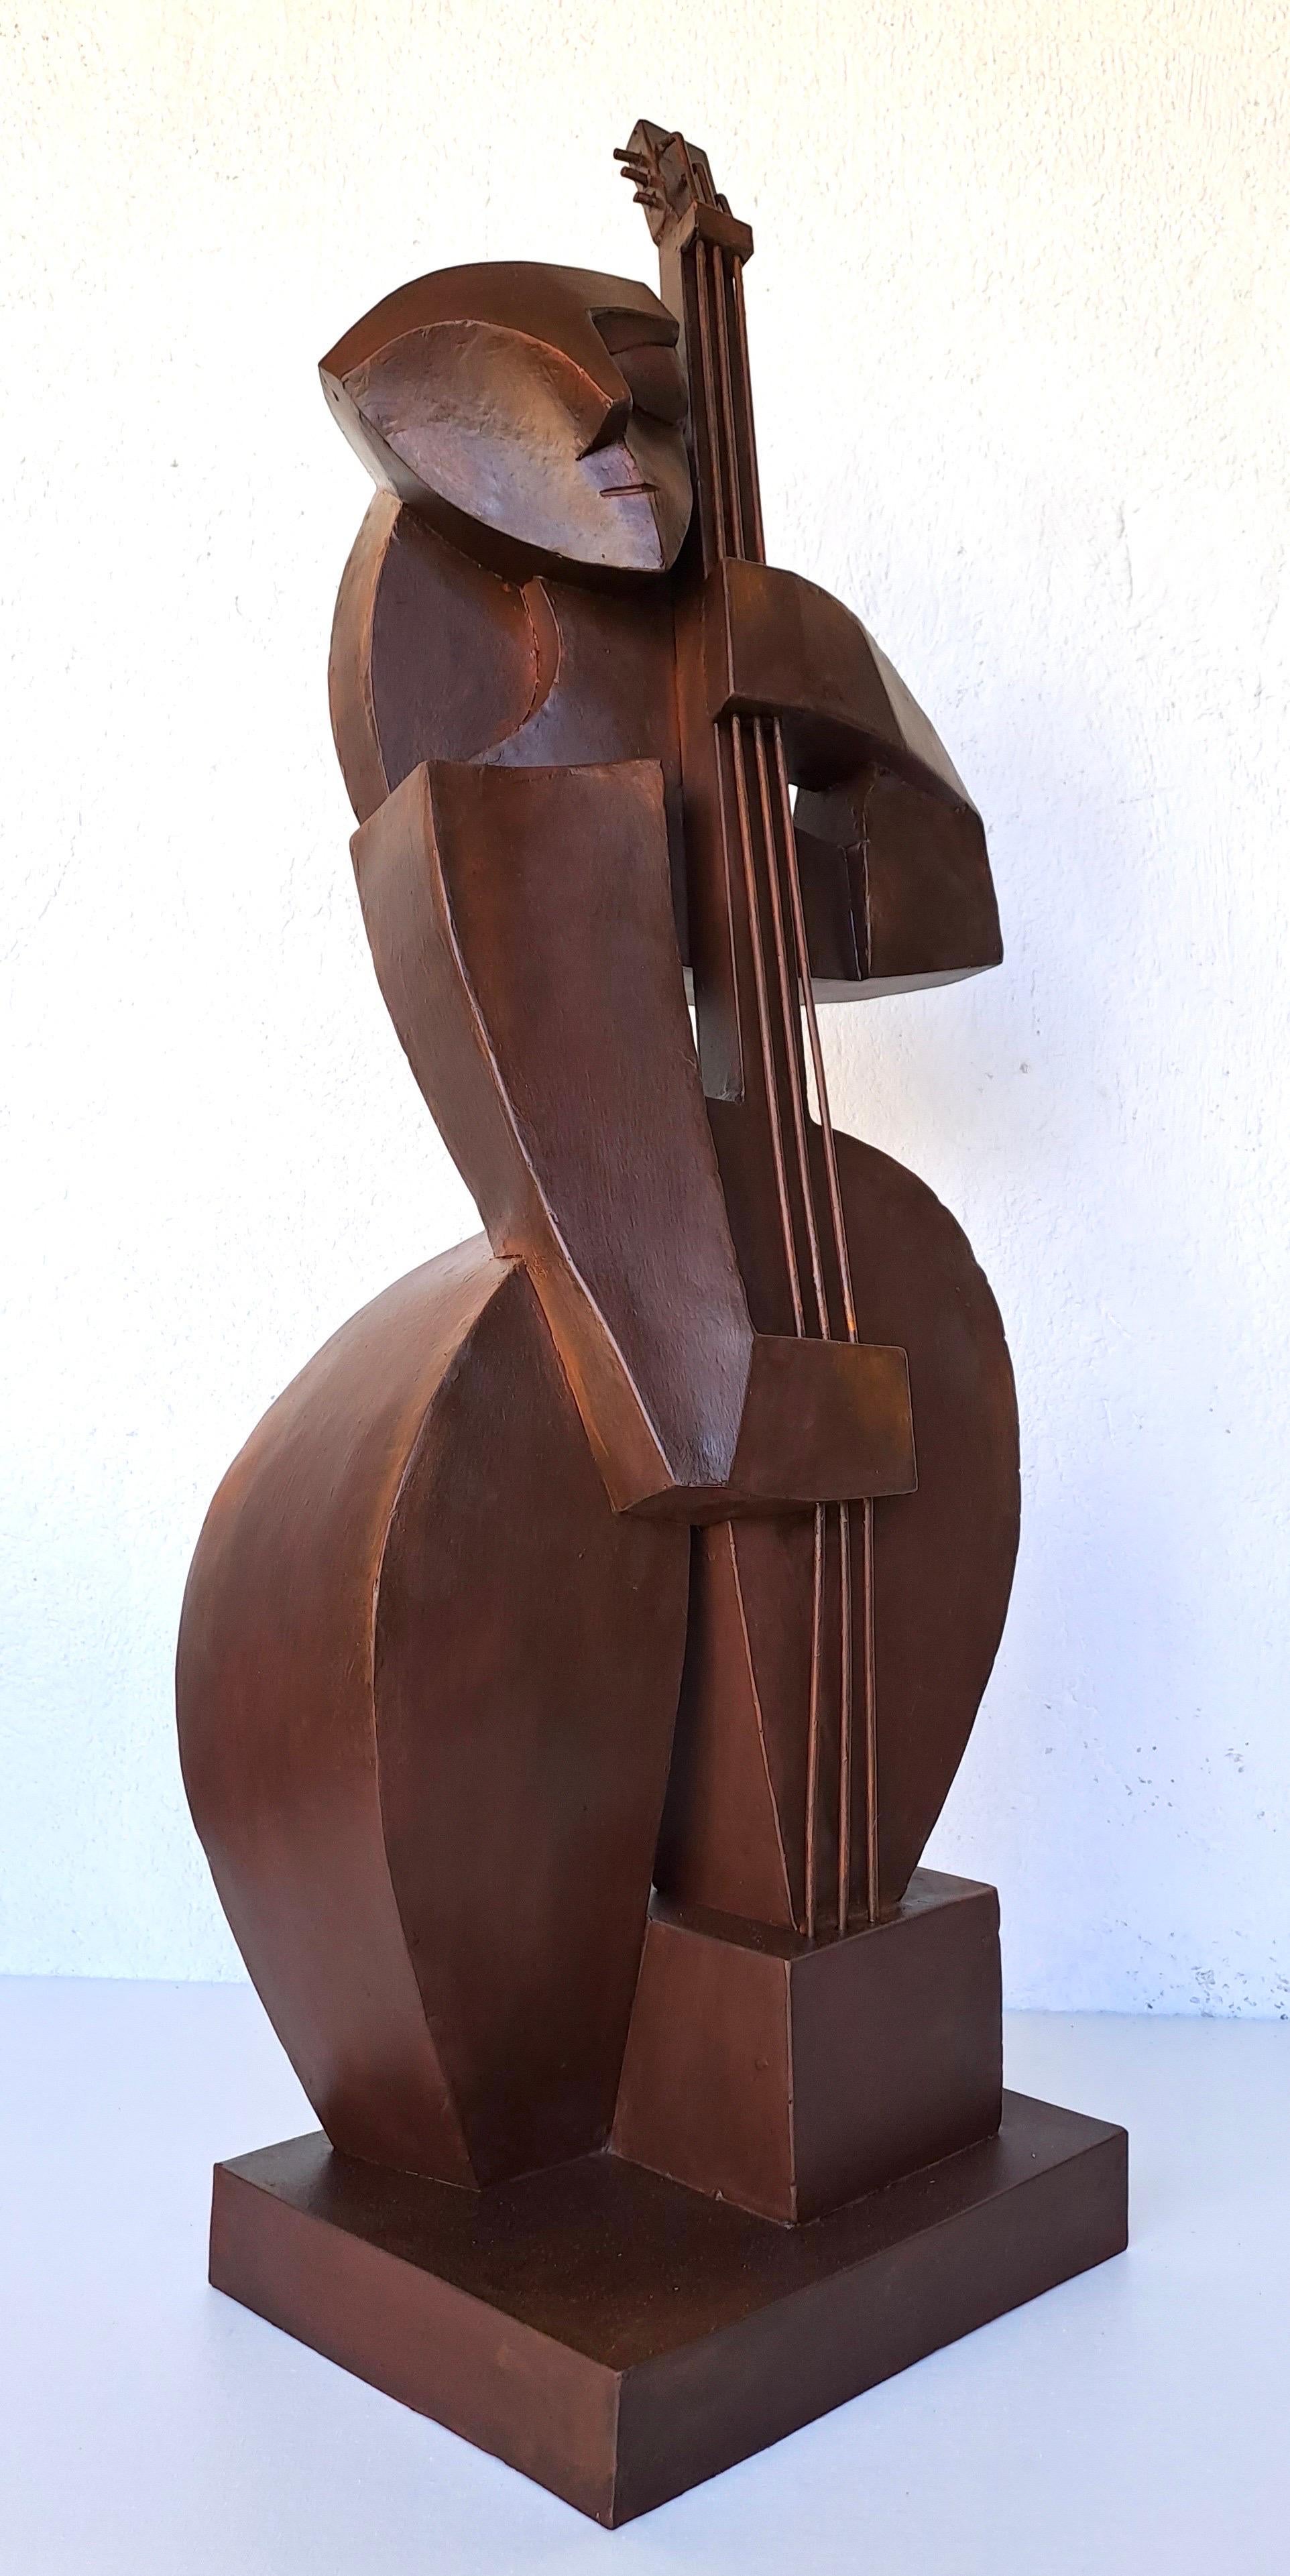 Ulises Jimenez Obregon Abstract Sculpture - "BAJISTA"